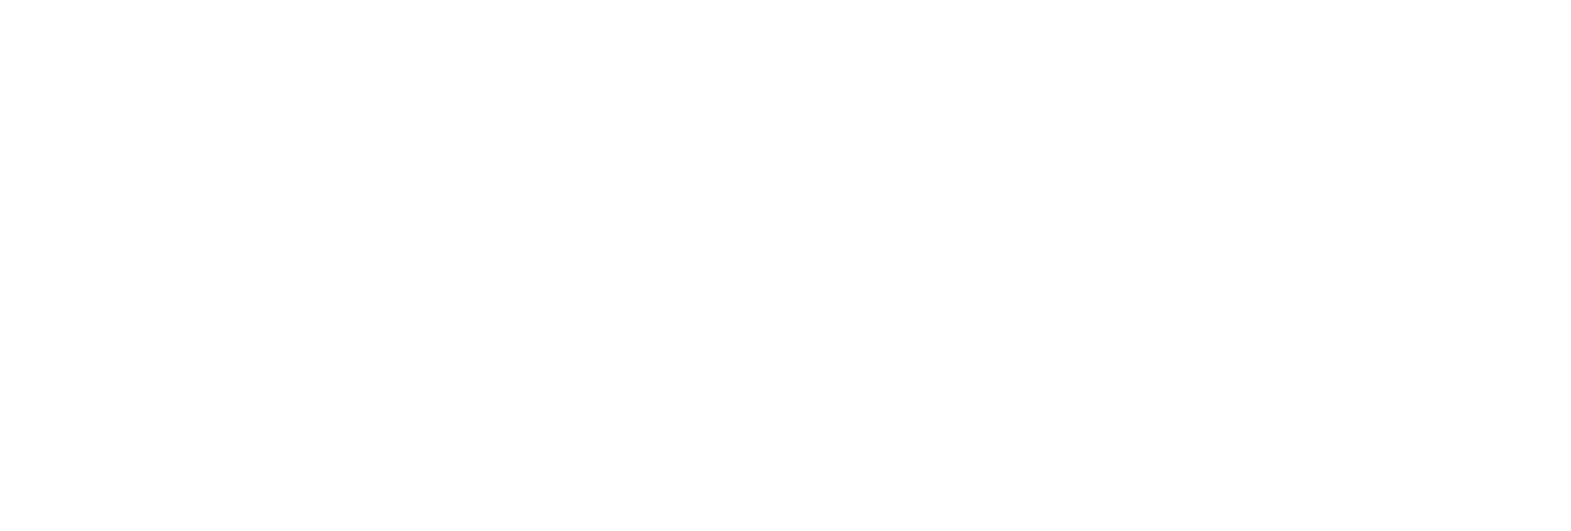 Universal Robina Corporation Logo groß für dunkle Hintergründe (transparentes PNG)